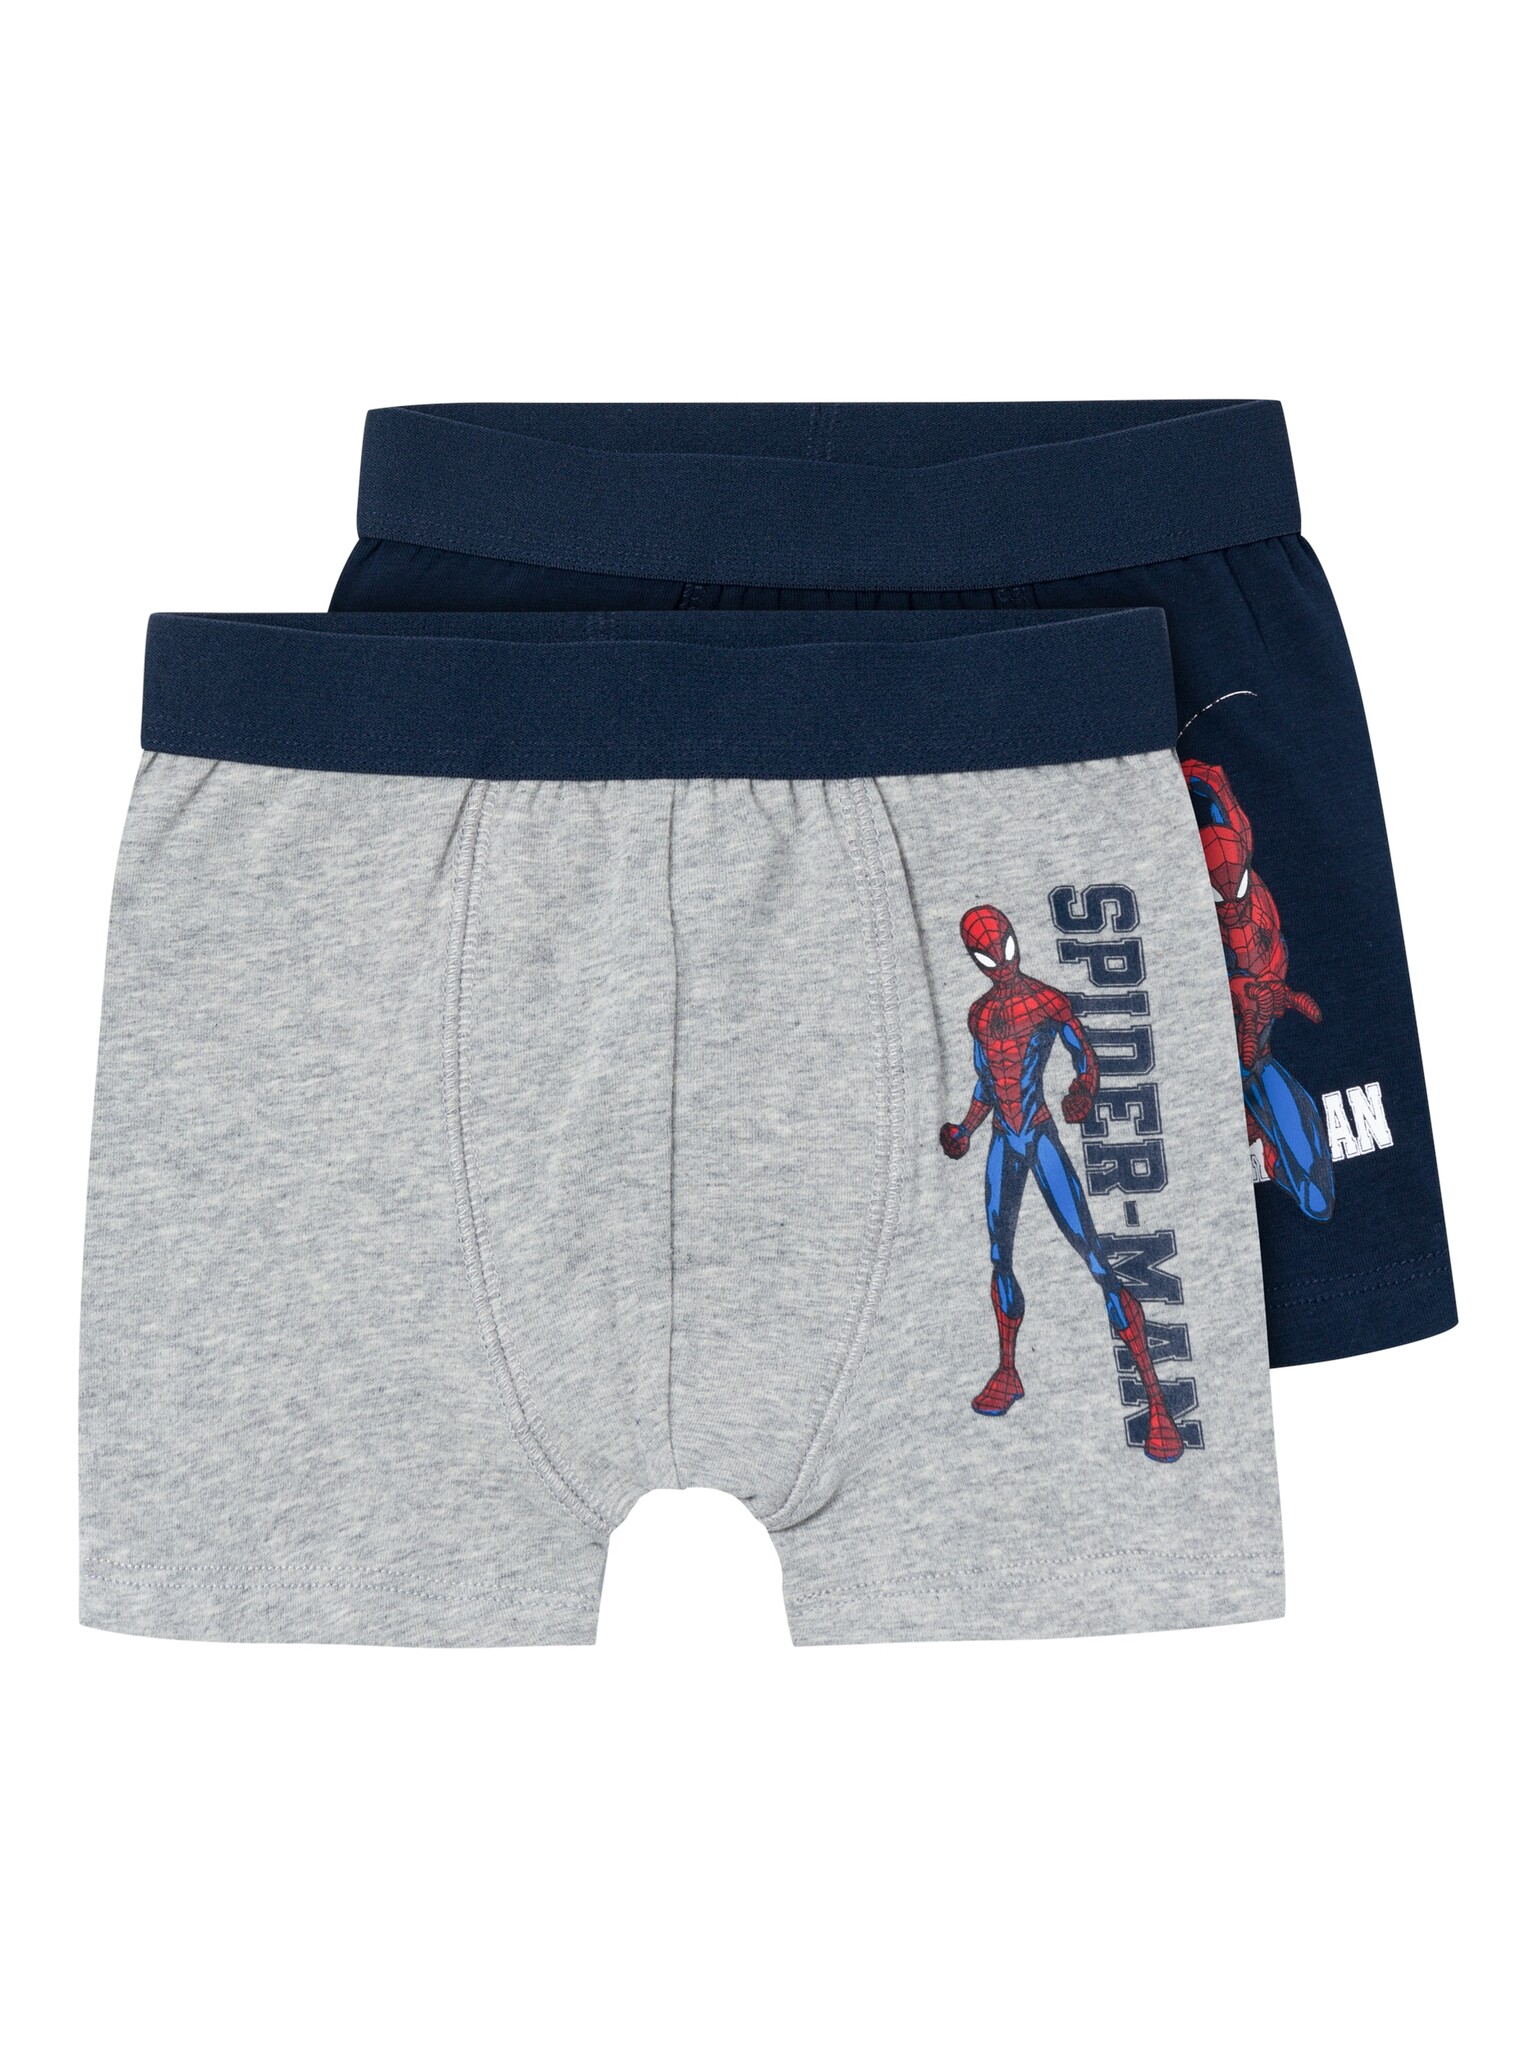 Name It Name It Jongens Boxershorts Spiderman Blauw Grijs 2 Pack